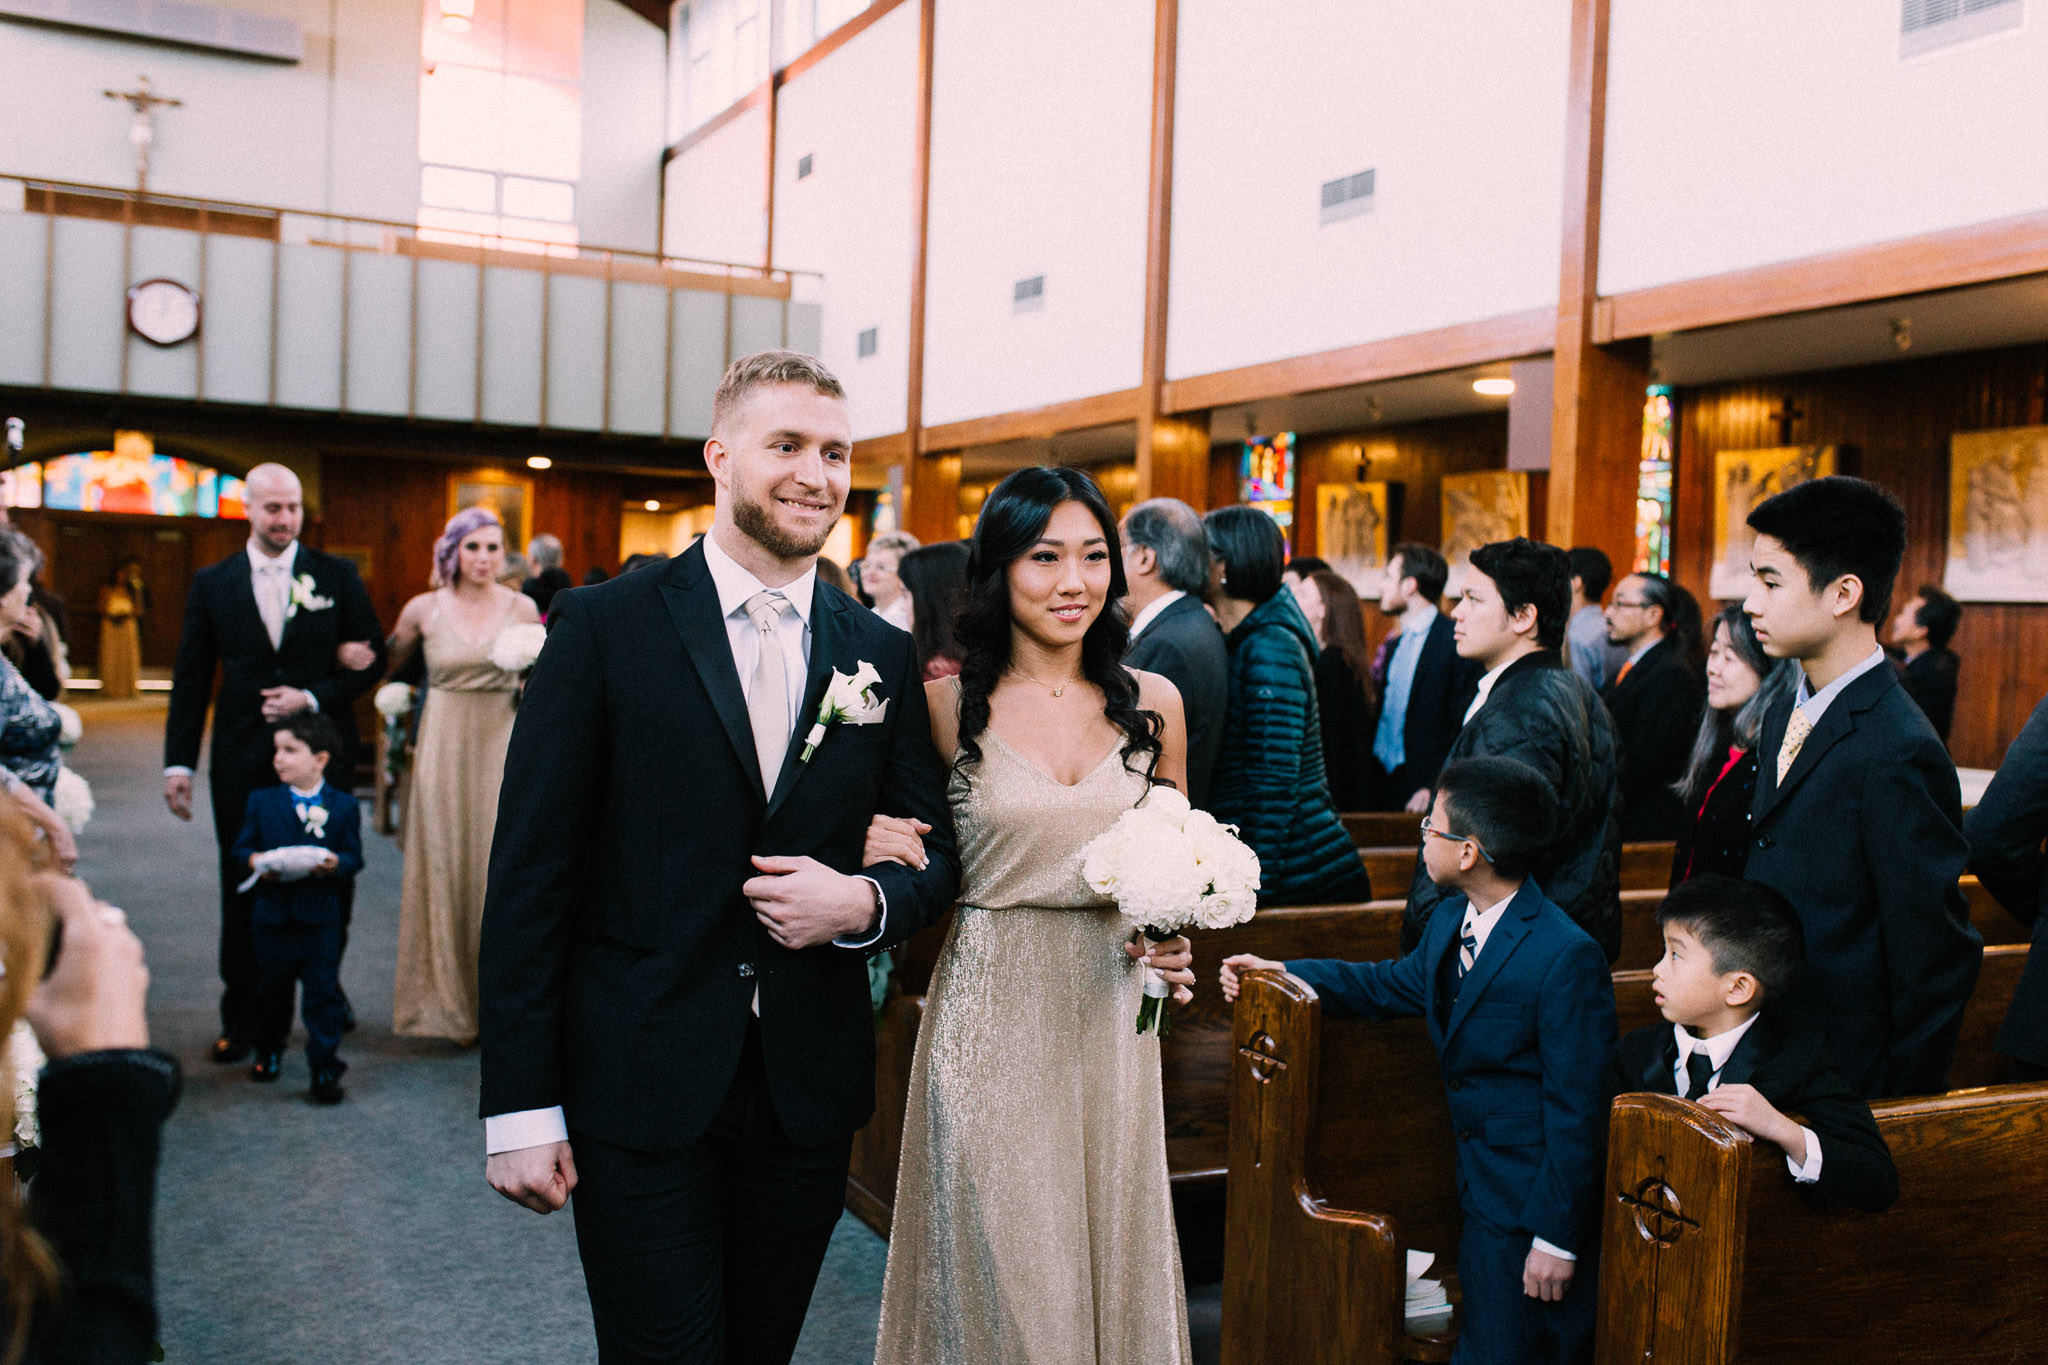 Vaughn wedding at Chateau Le Jardin by Max Wong Photo (23)